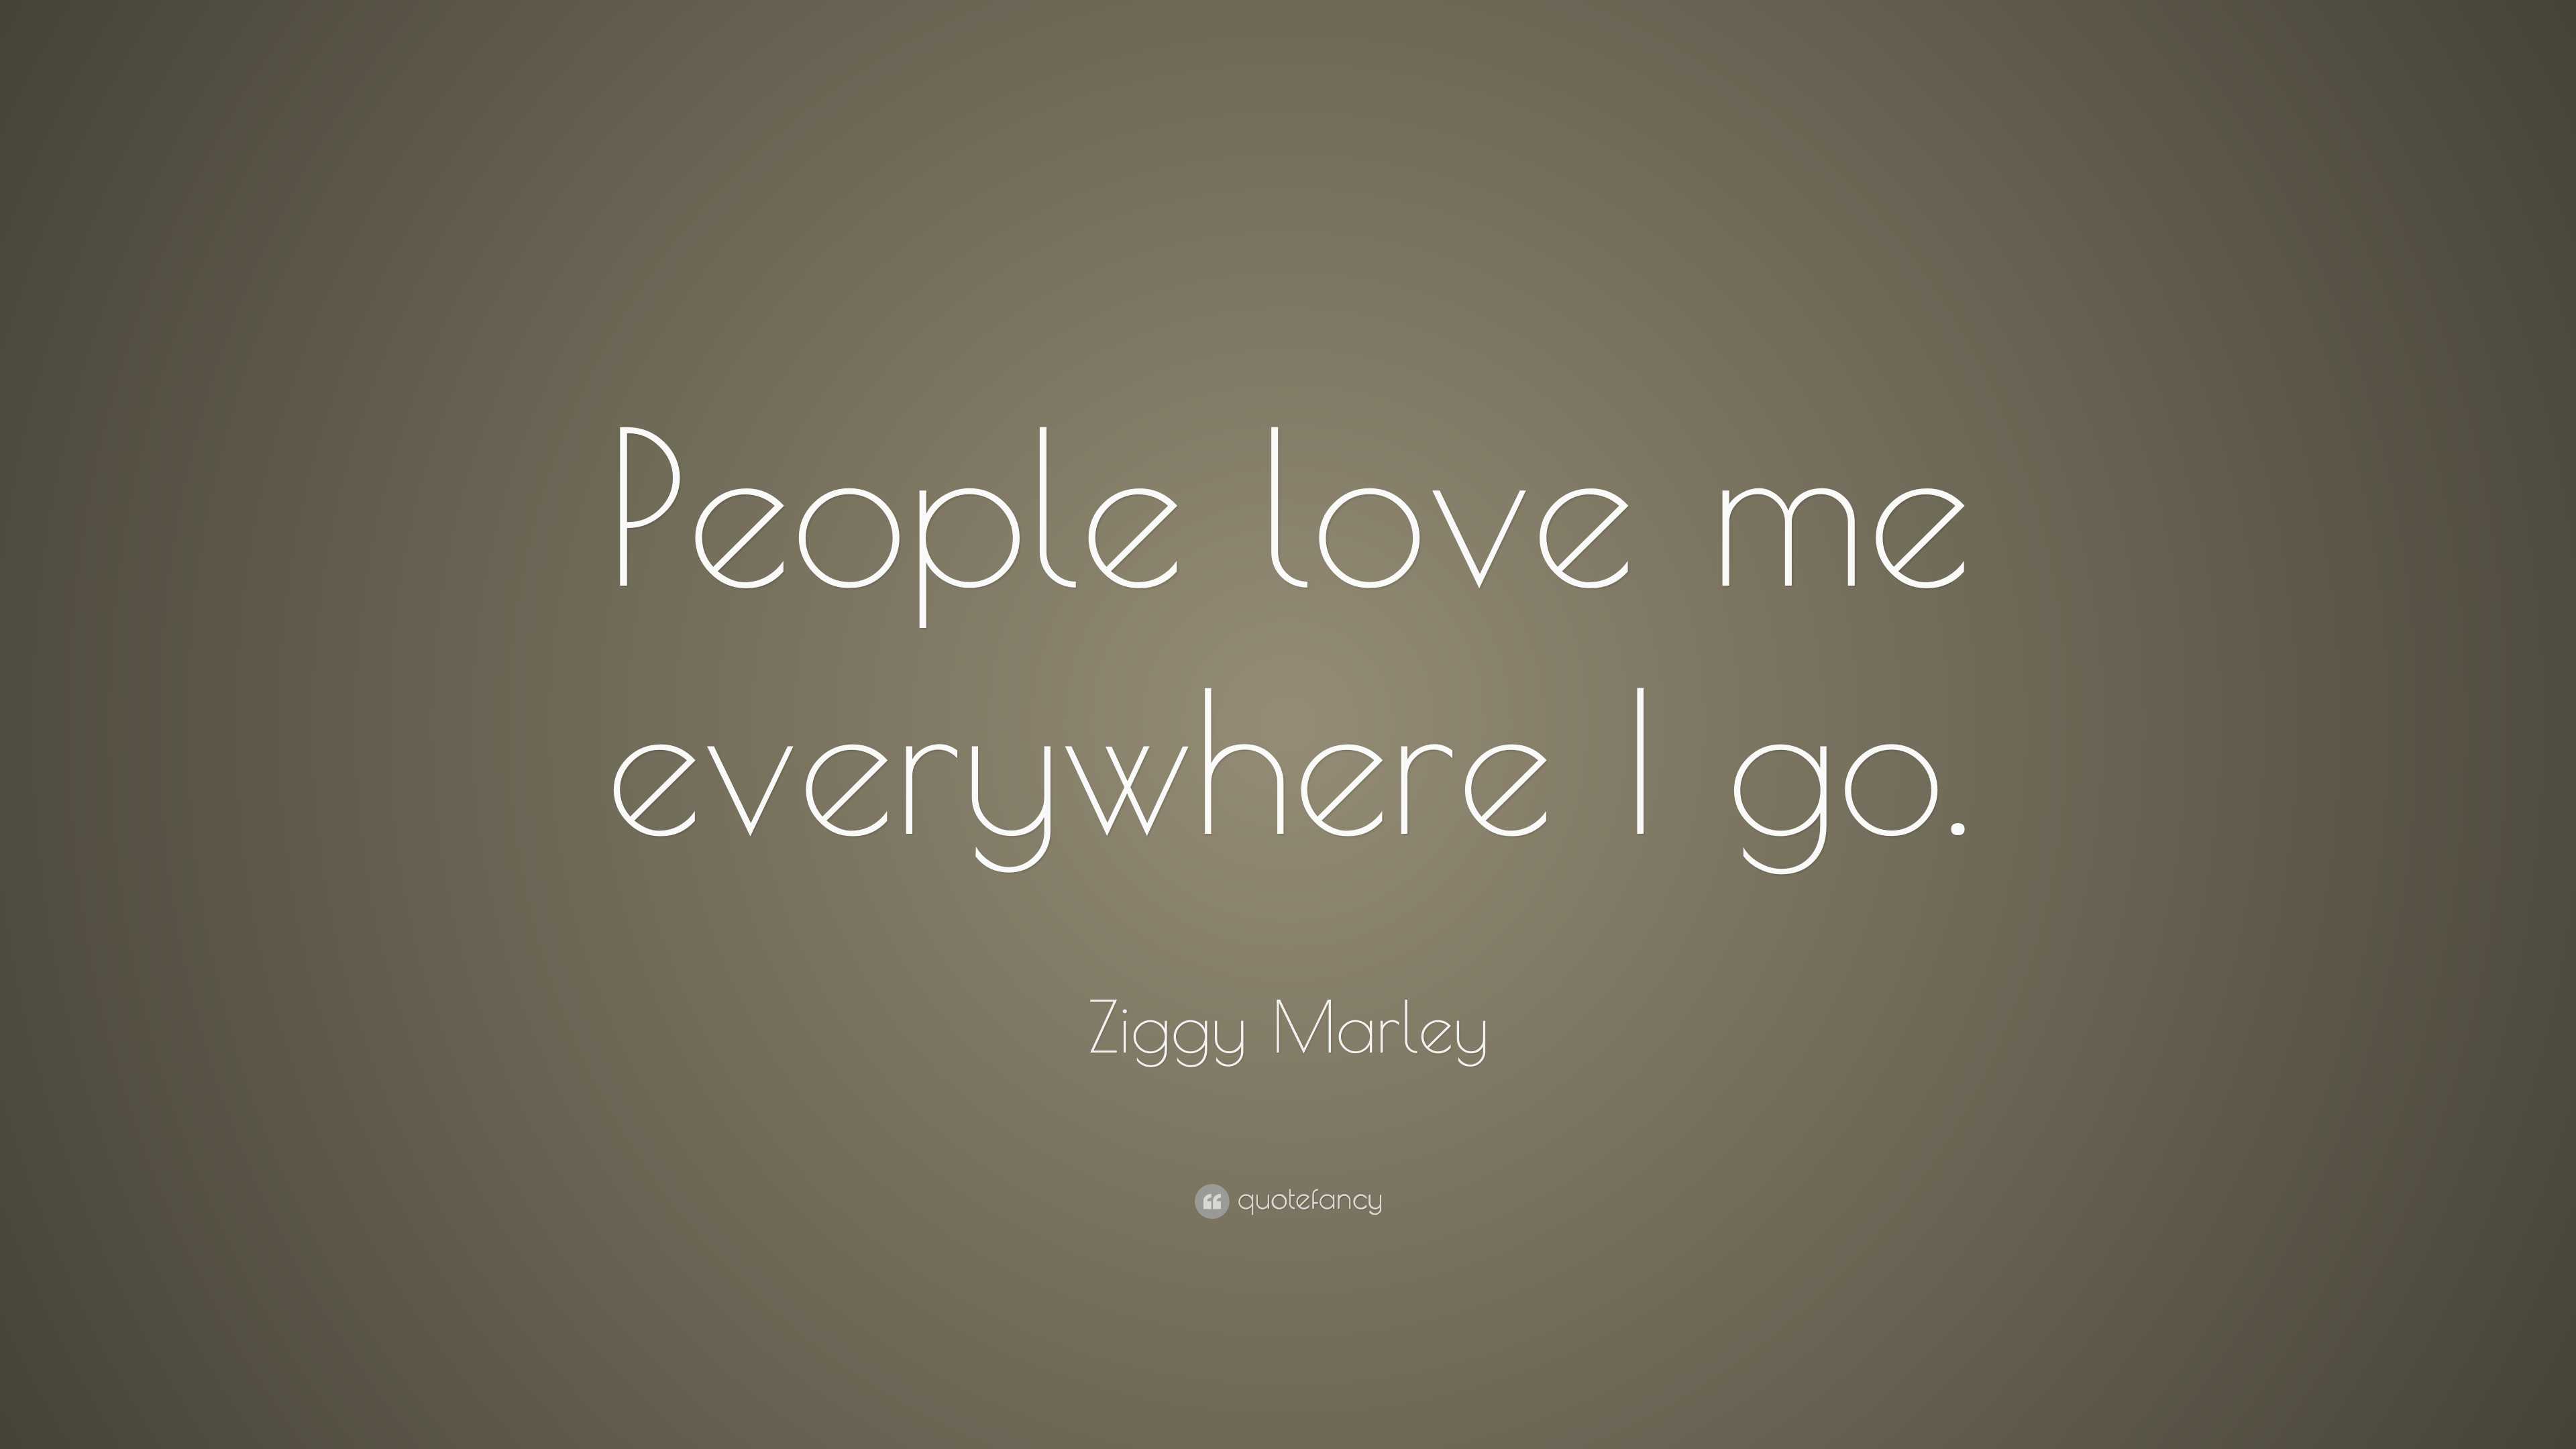 Ziggy Marley Quote: “People love me everywhere I go.”